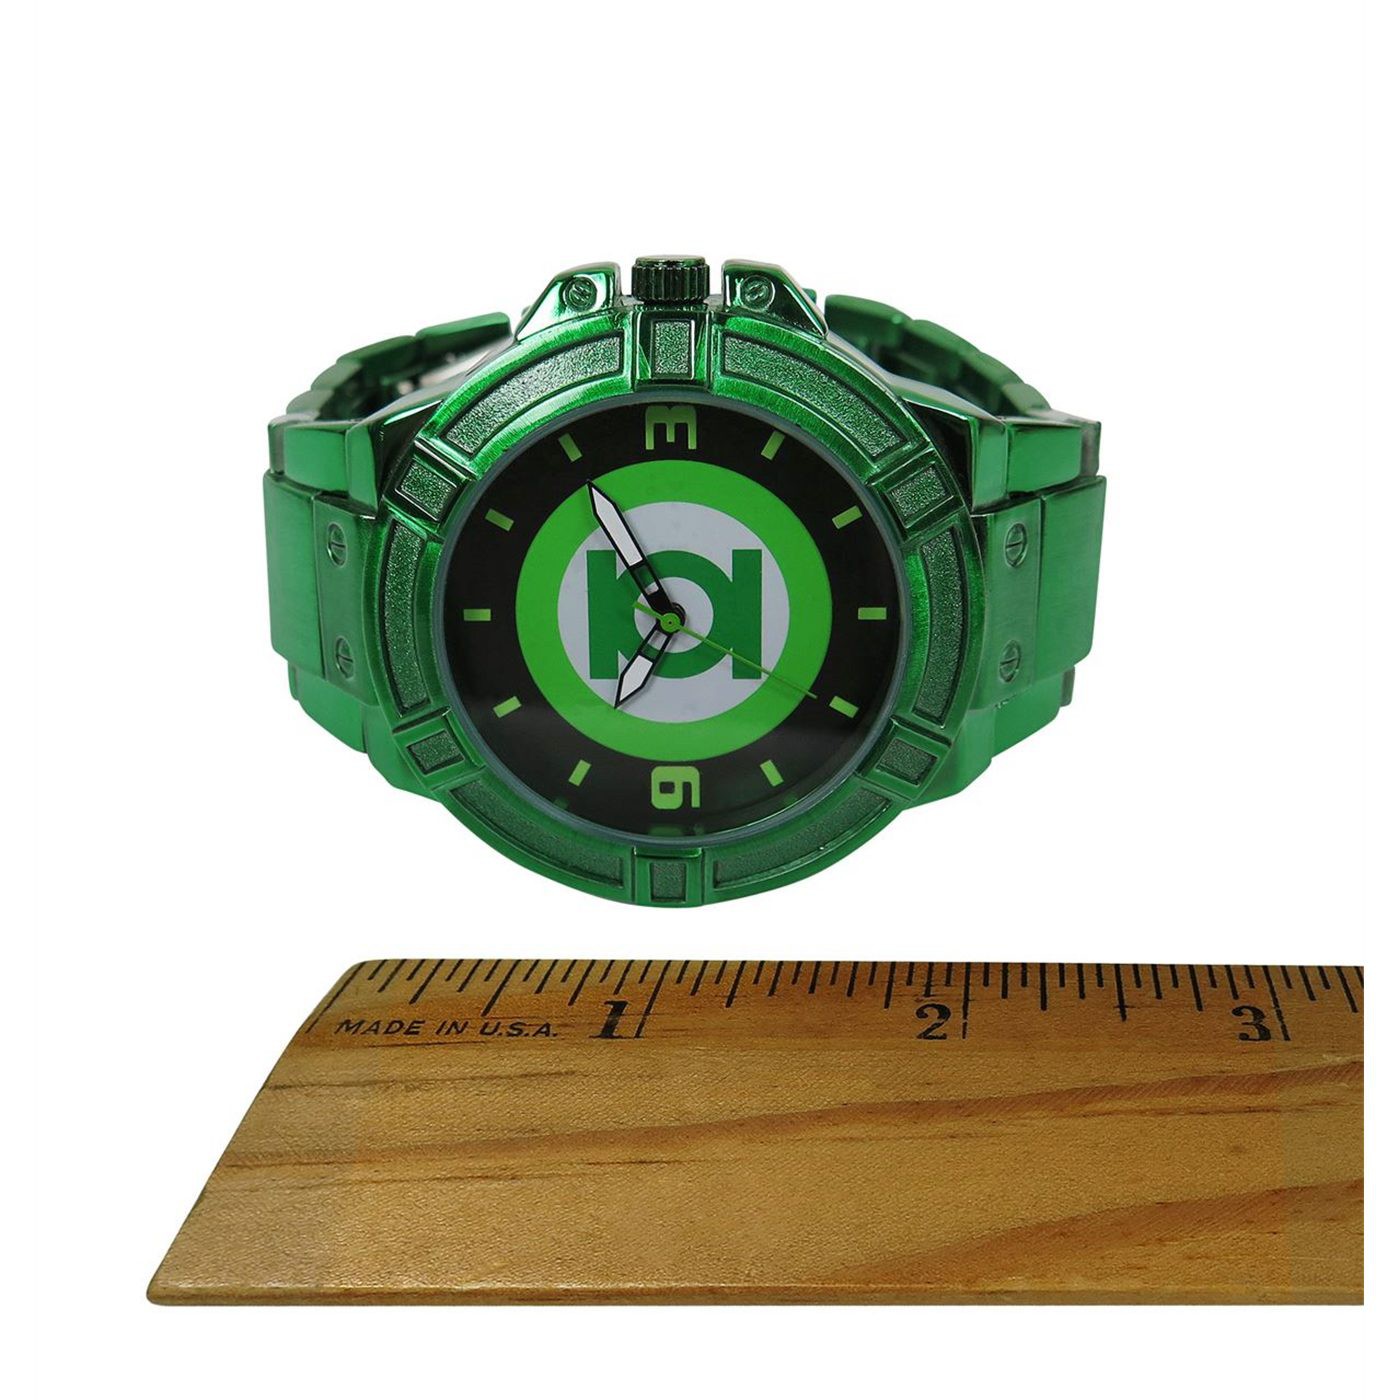 Green Lantern Symbol Watch with Metal Band